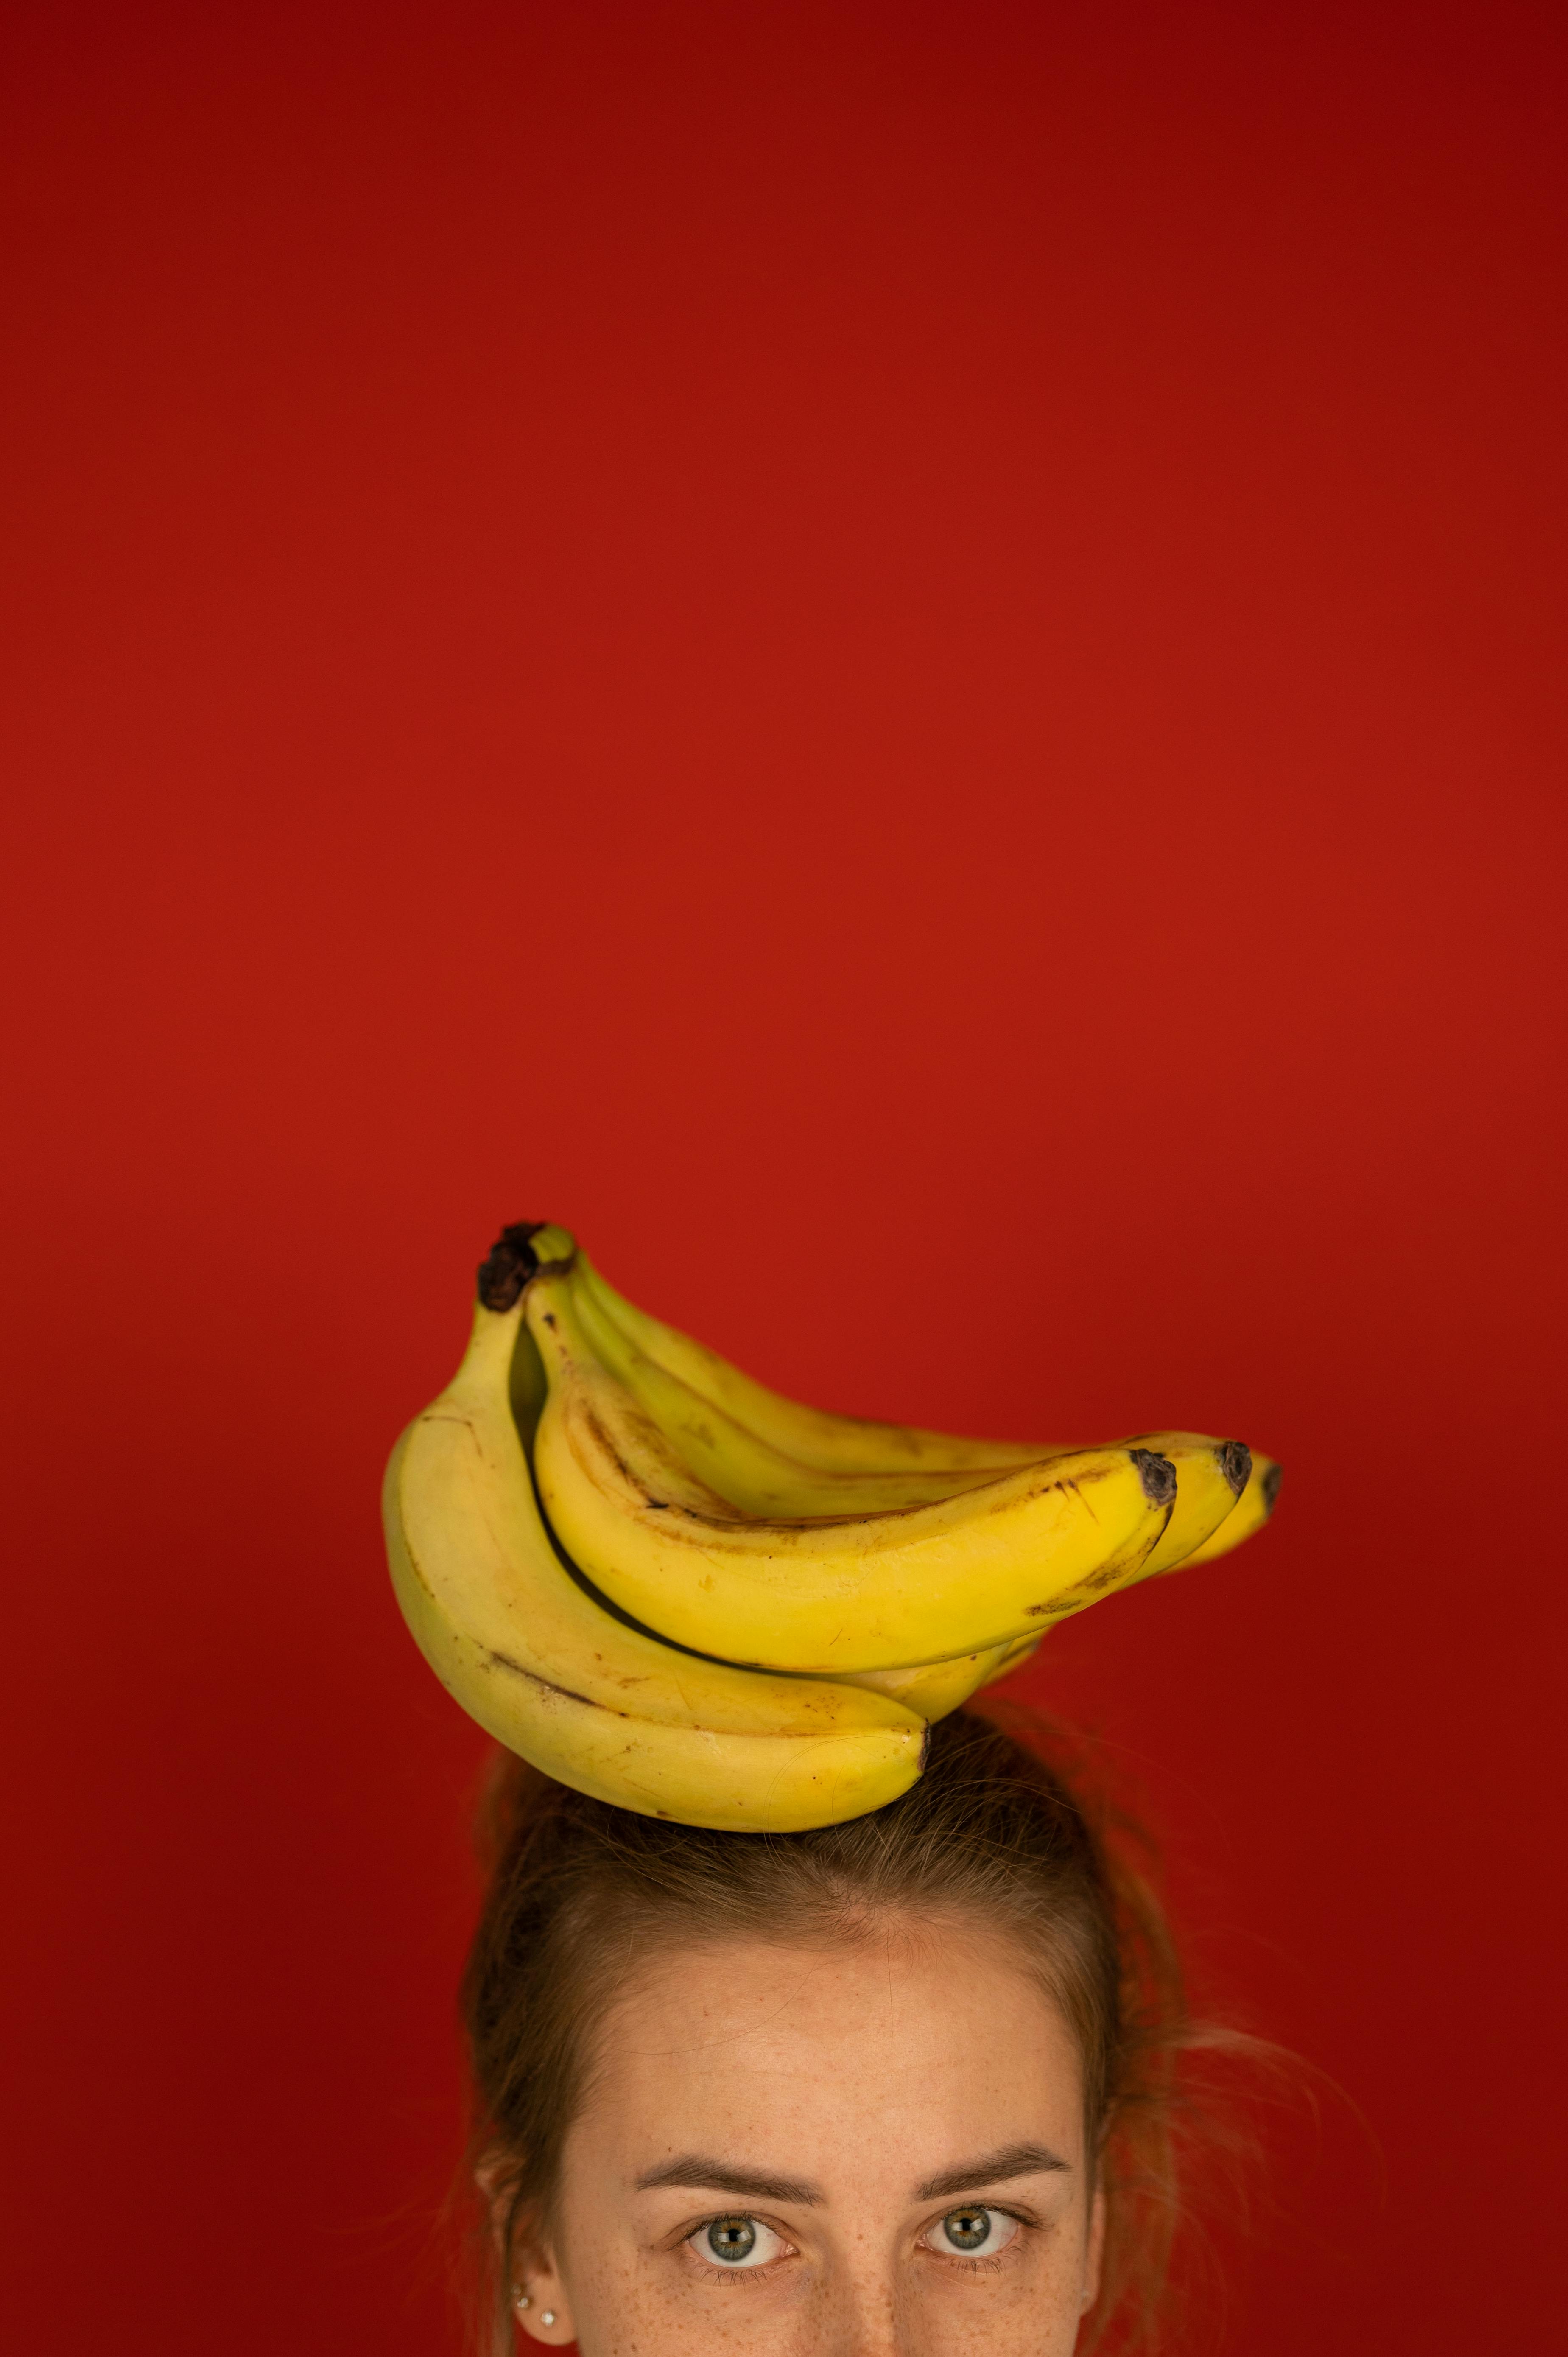 Copy space Photo of Yellow Bananas · Free Stock Photo